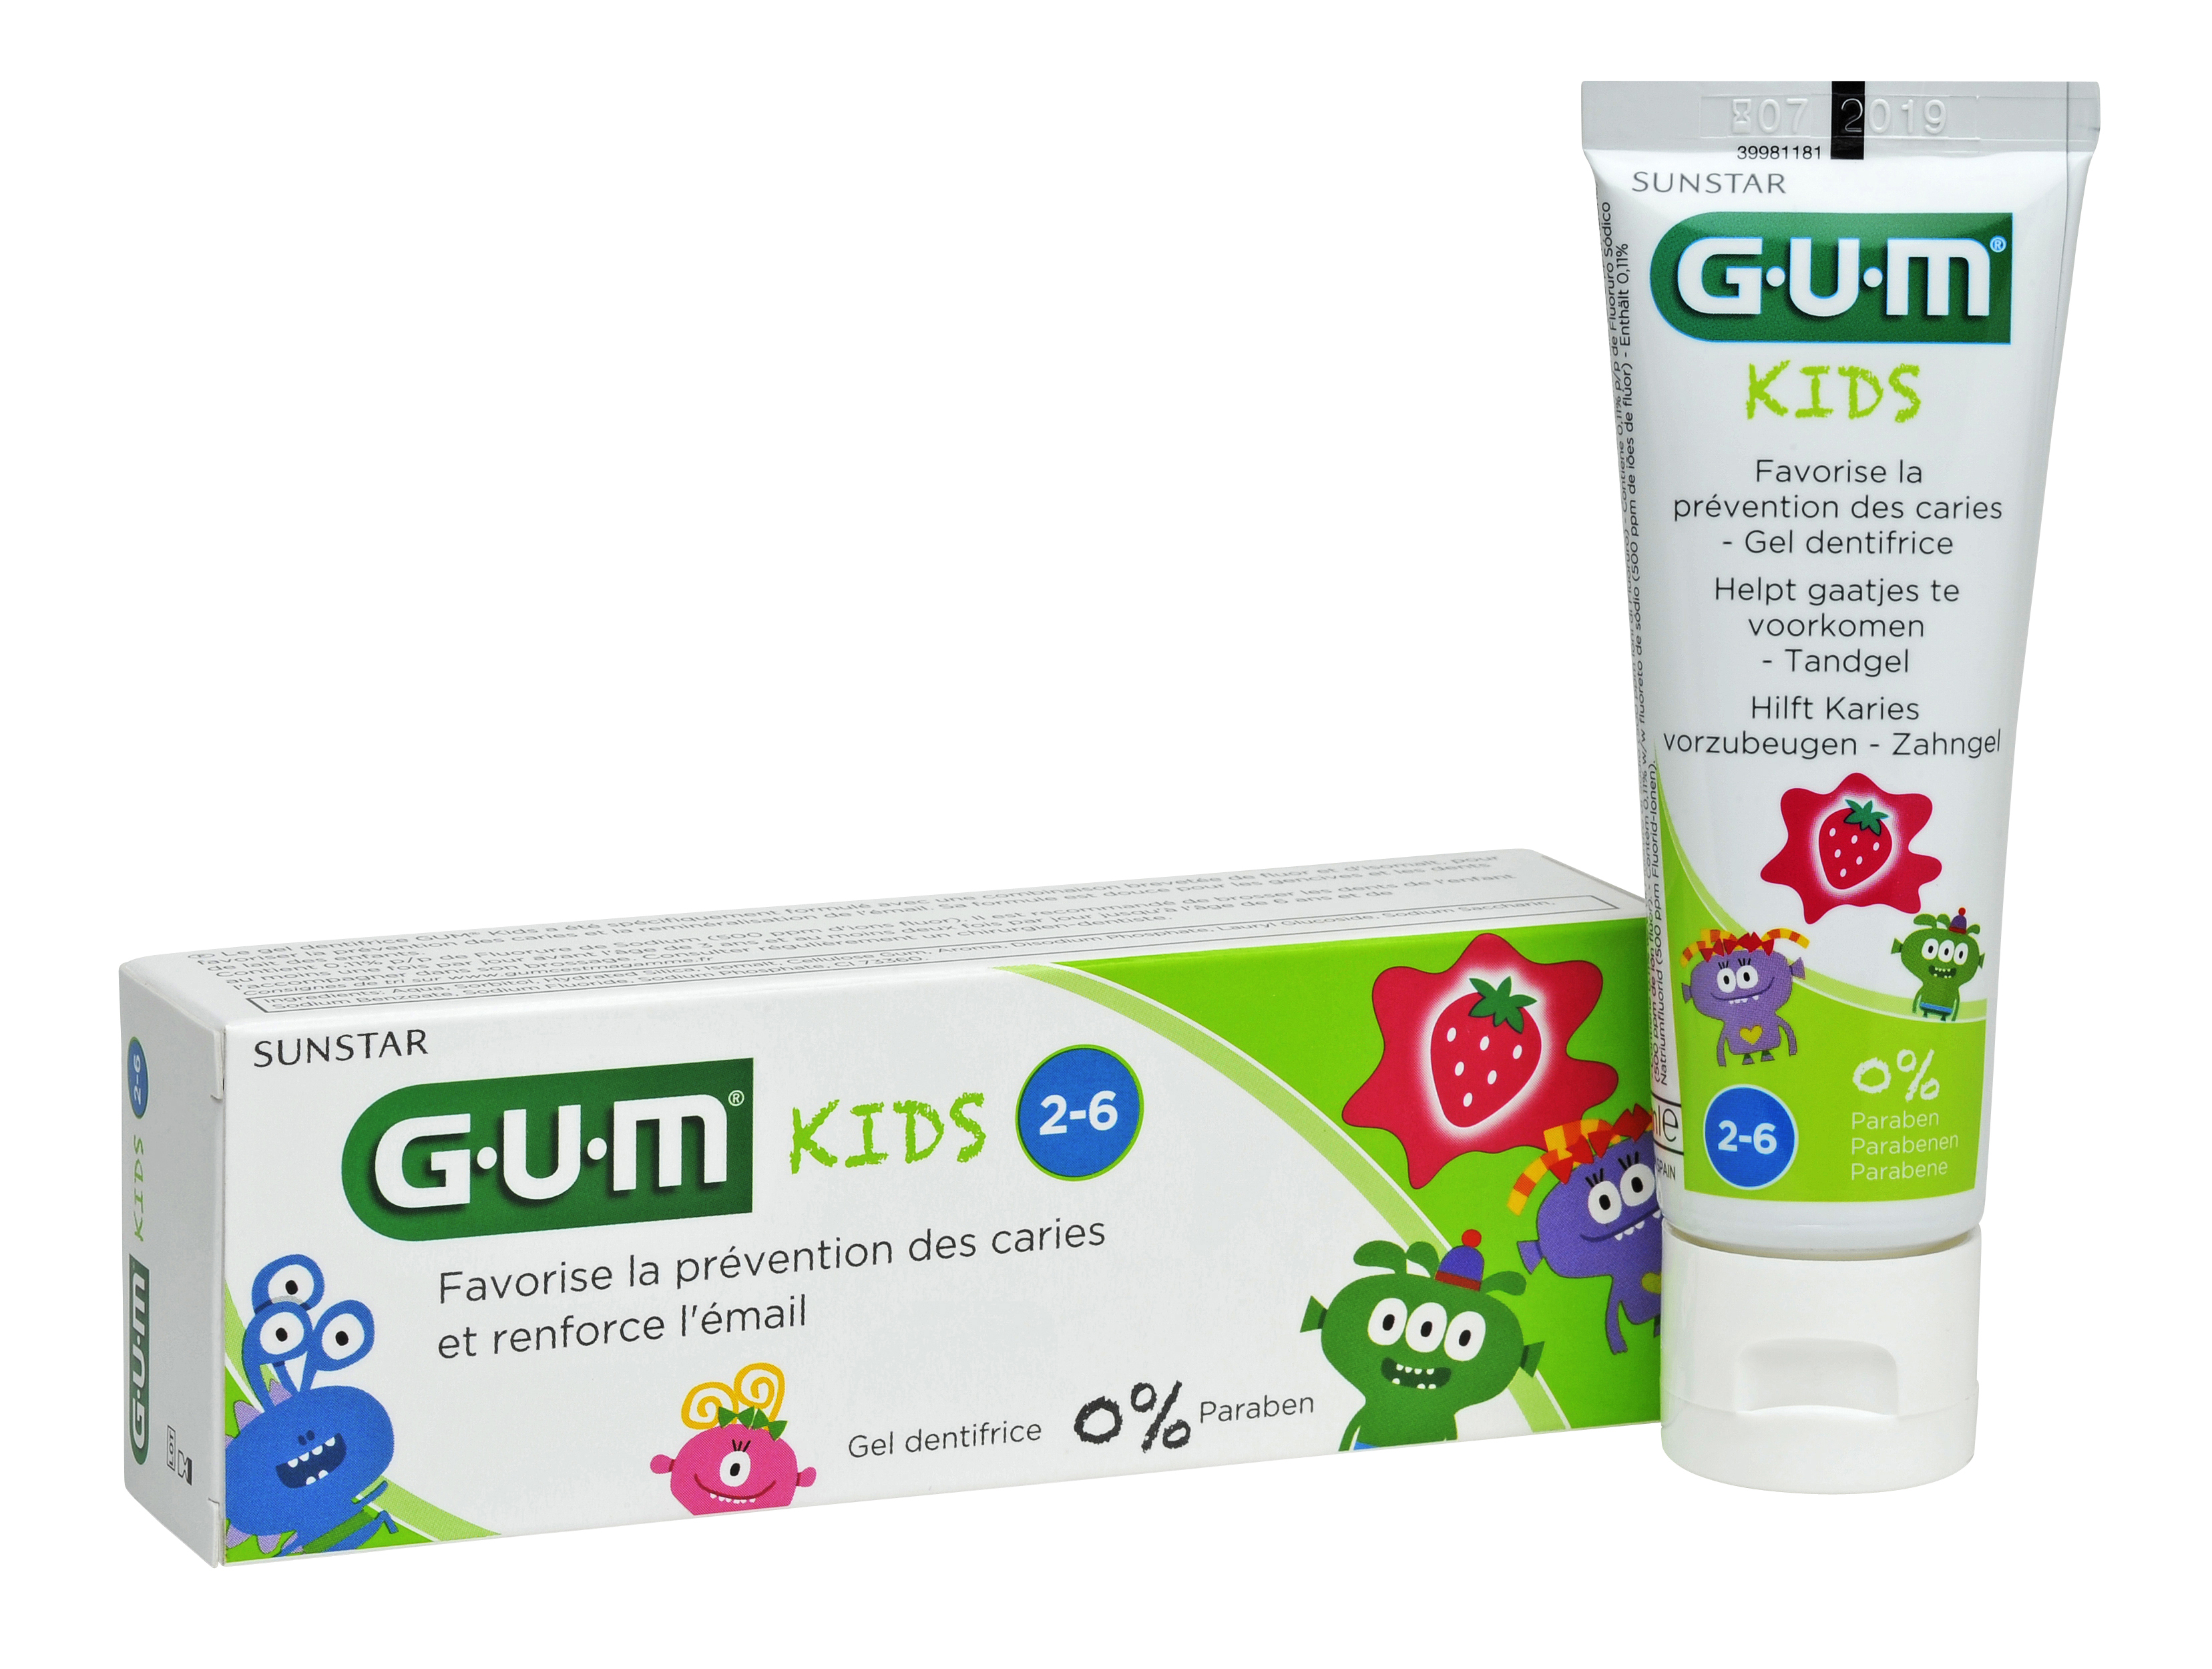 3000 G·U·M Kids Toothpaste : ยาสีฟันสำหรับเด็กอายุ 2-6 ปี